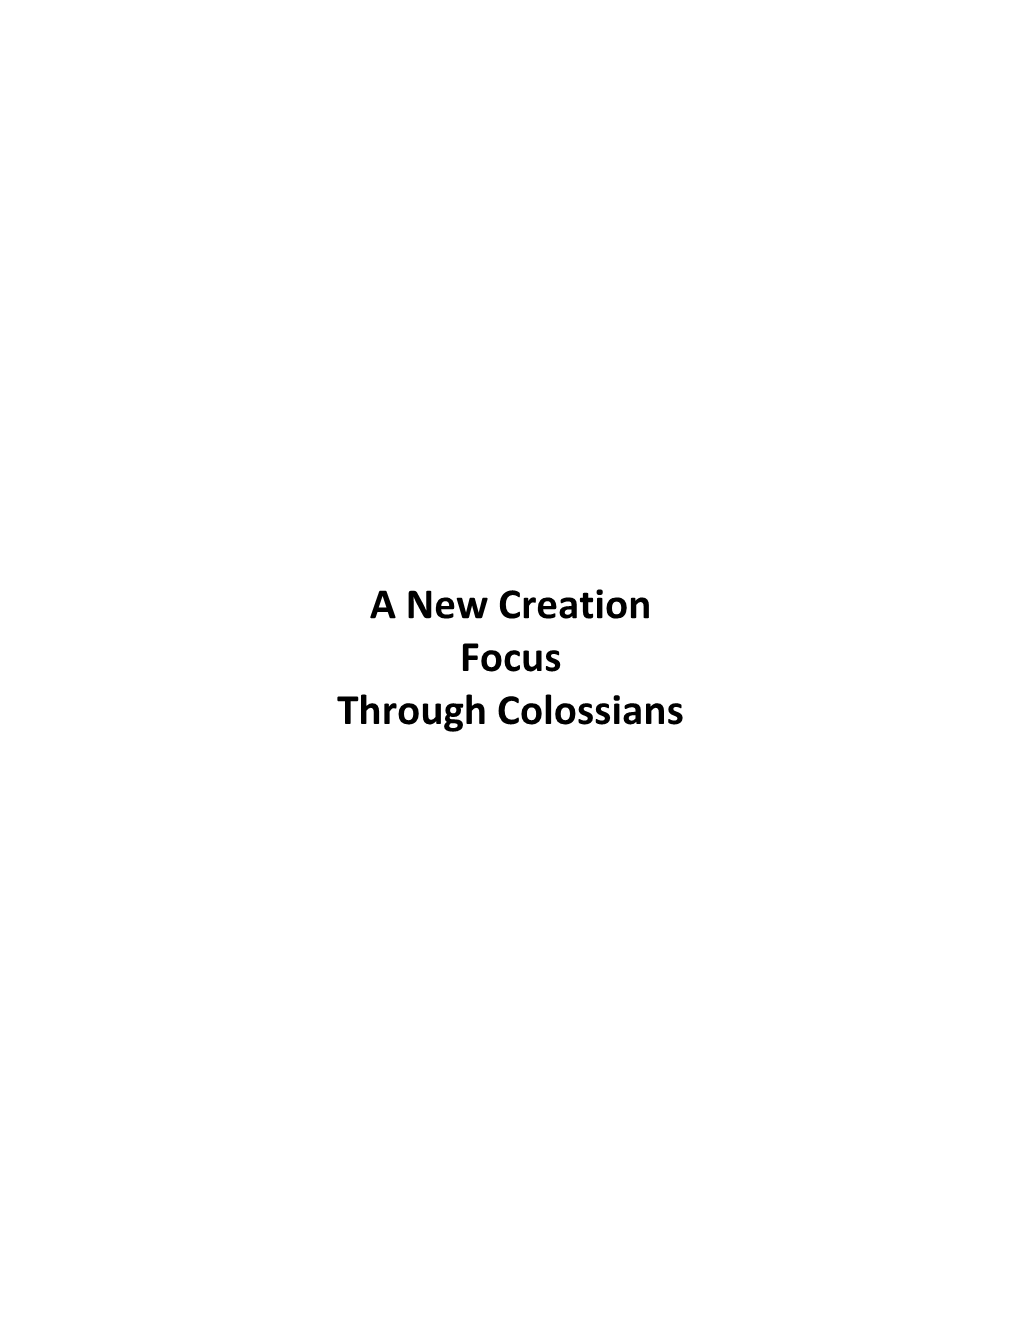 A New Creation Focus Through Colossians